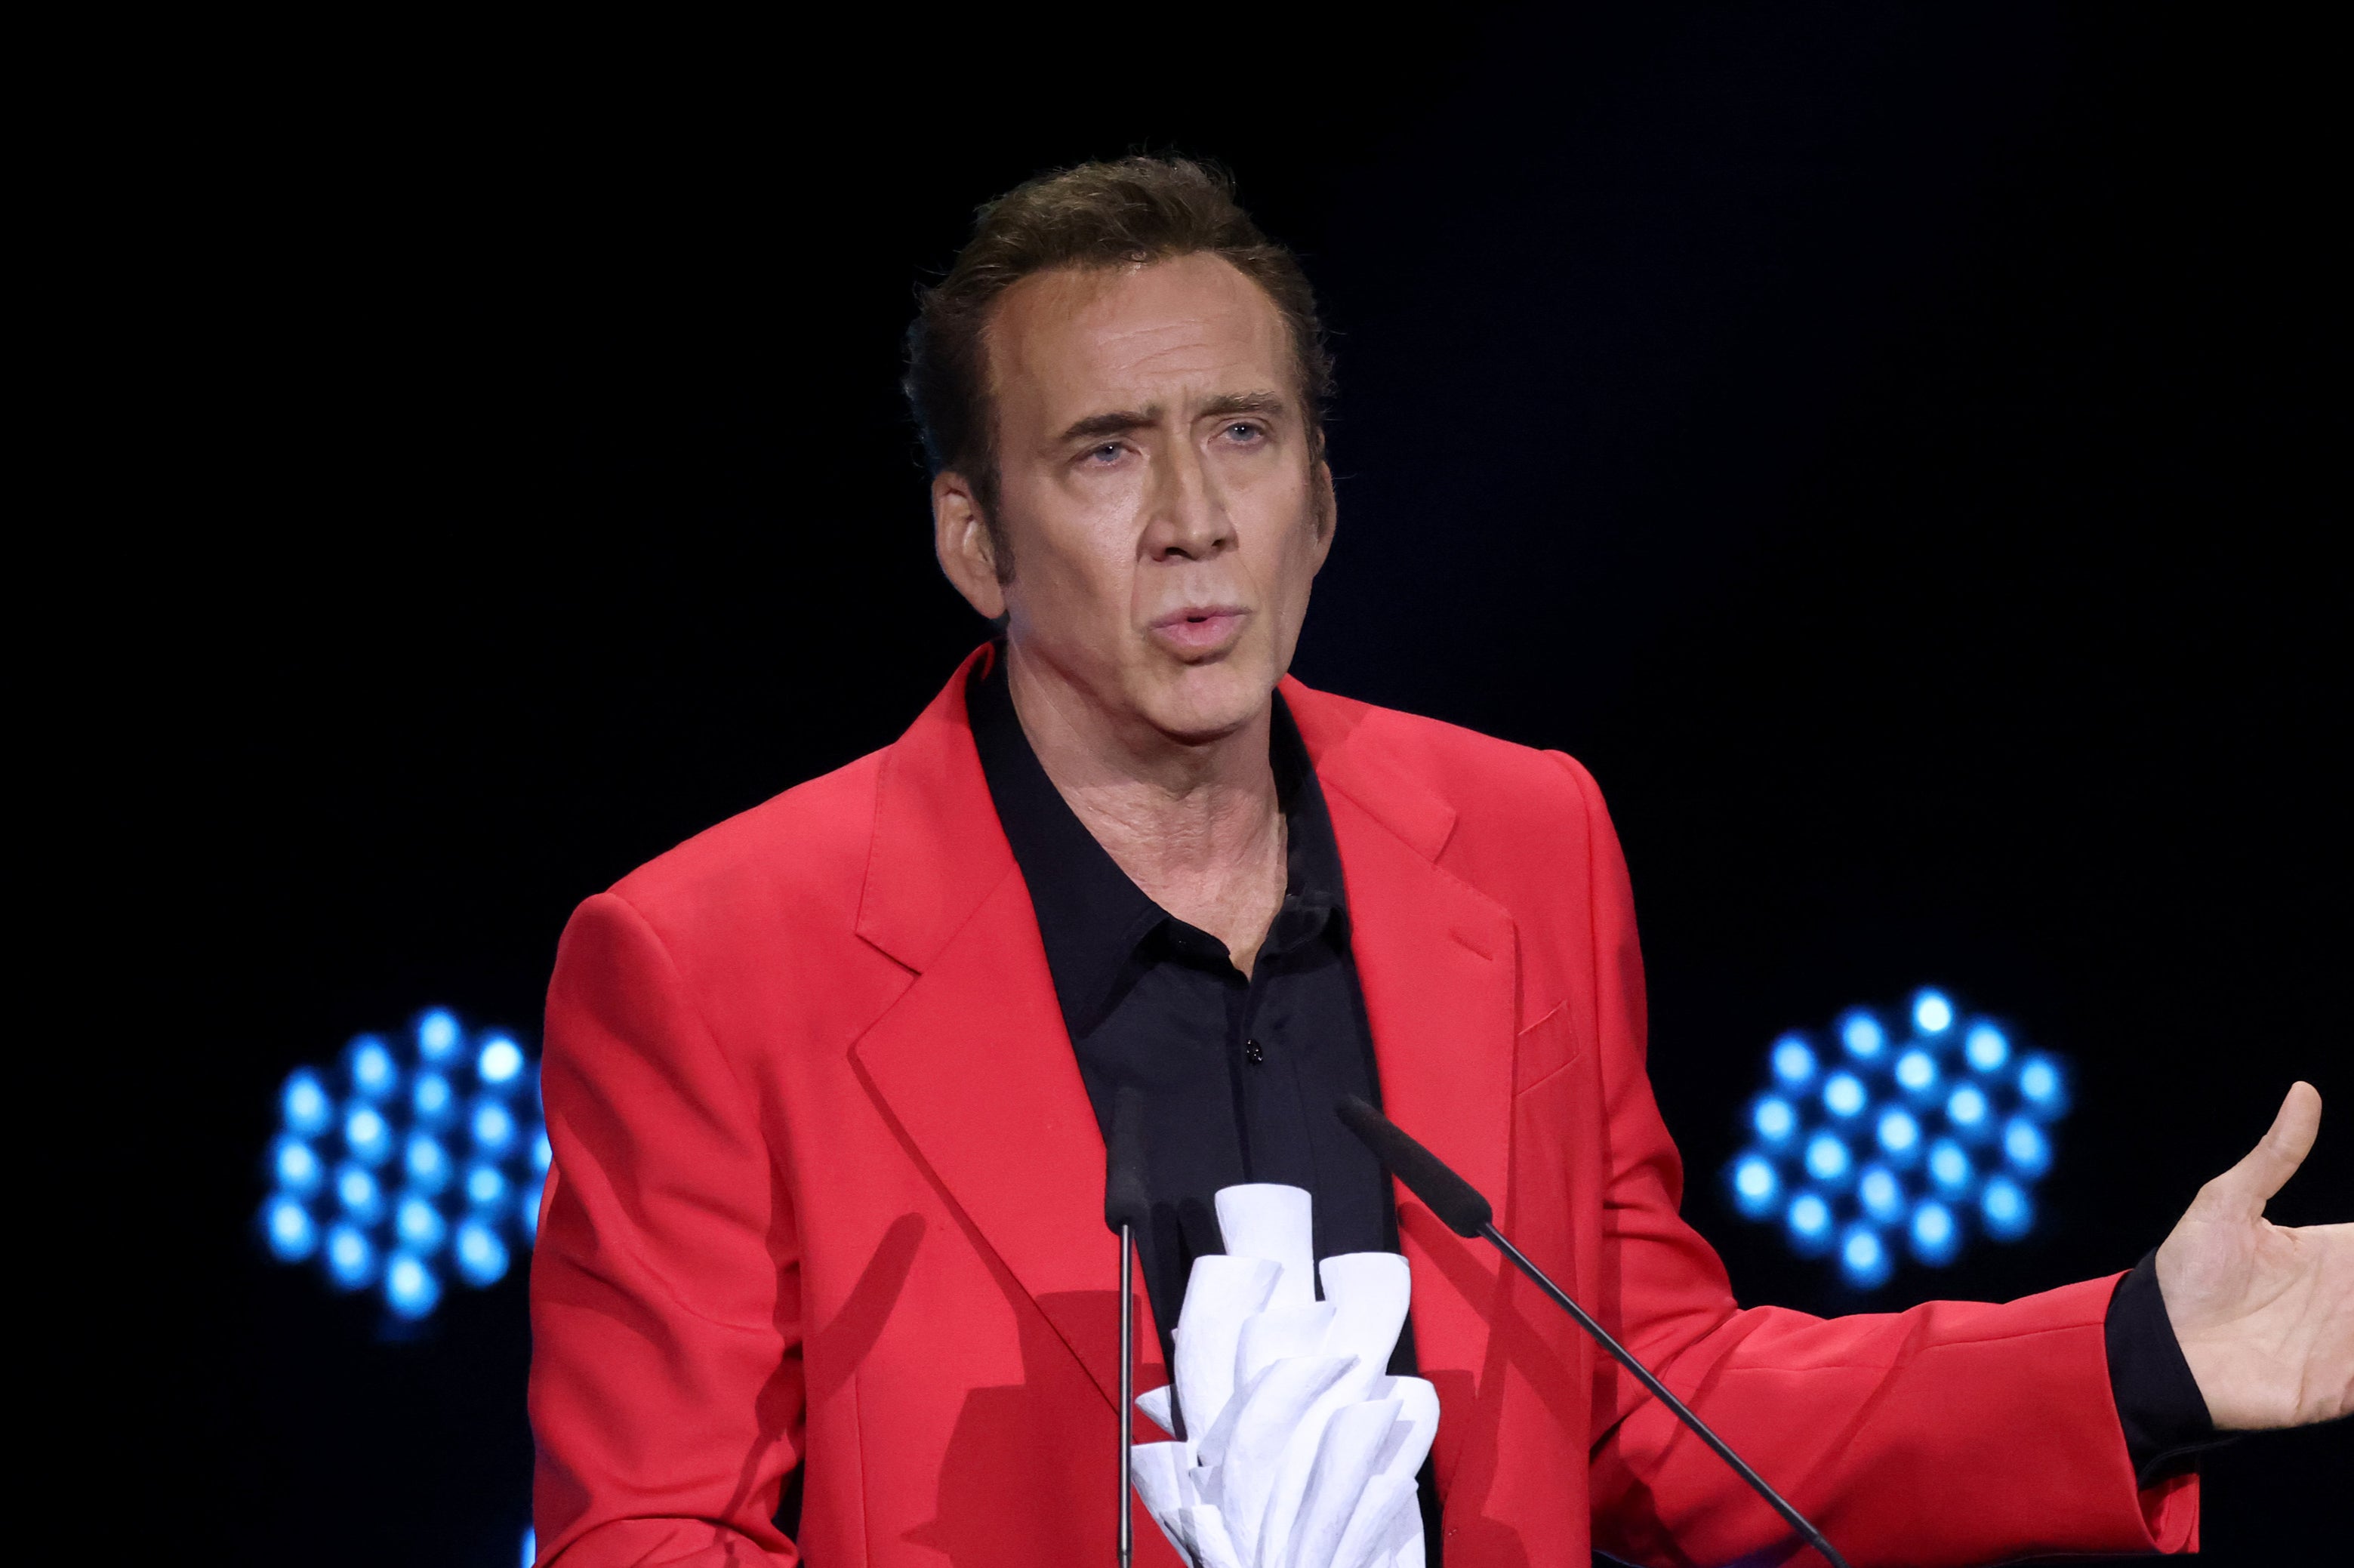 Nicolas Cage onstage at the Red Sea Film Festival